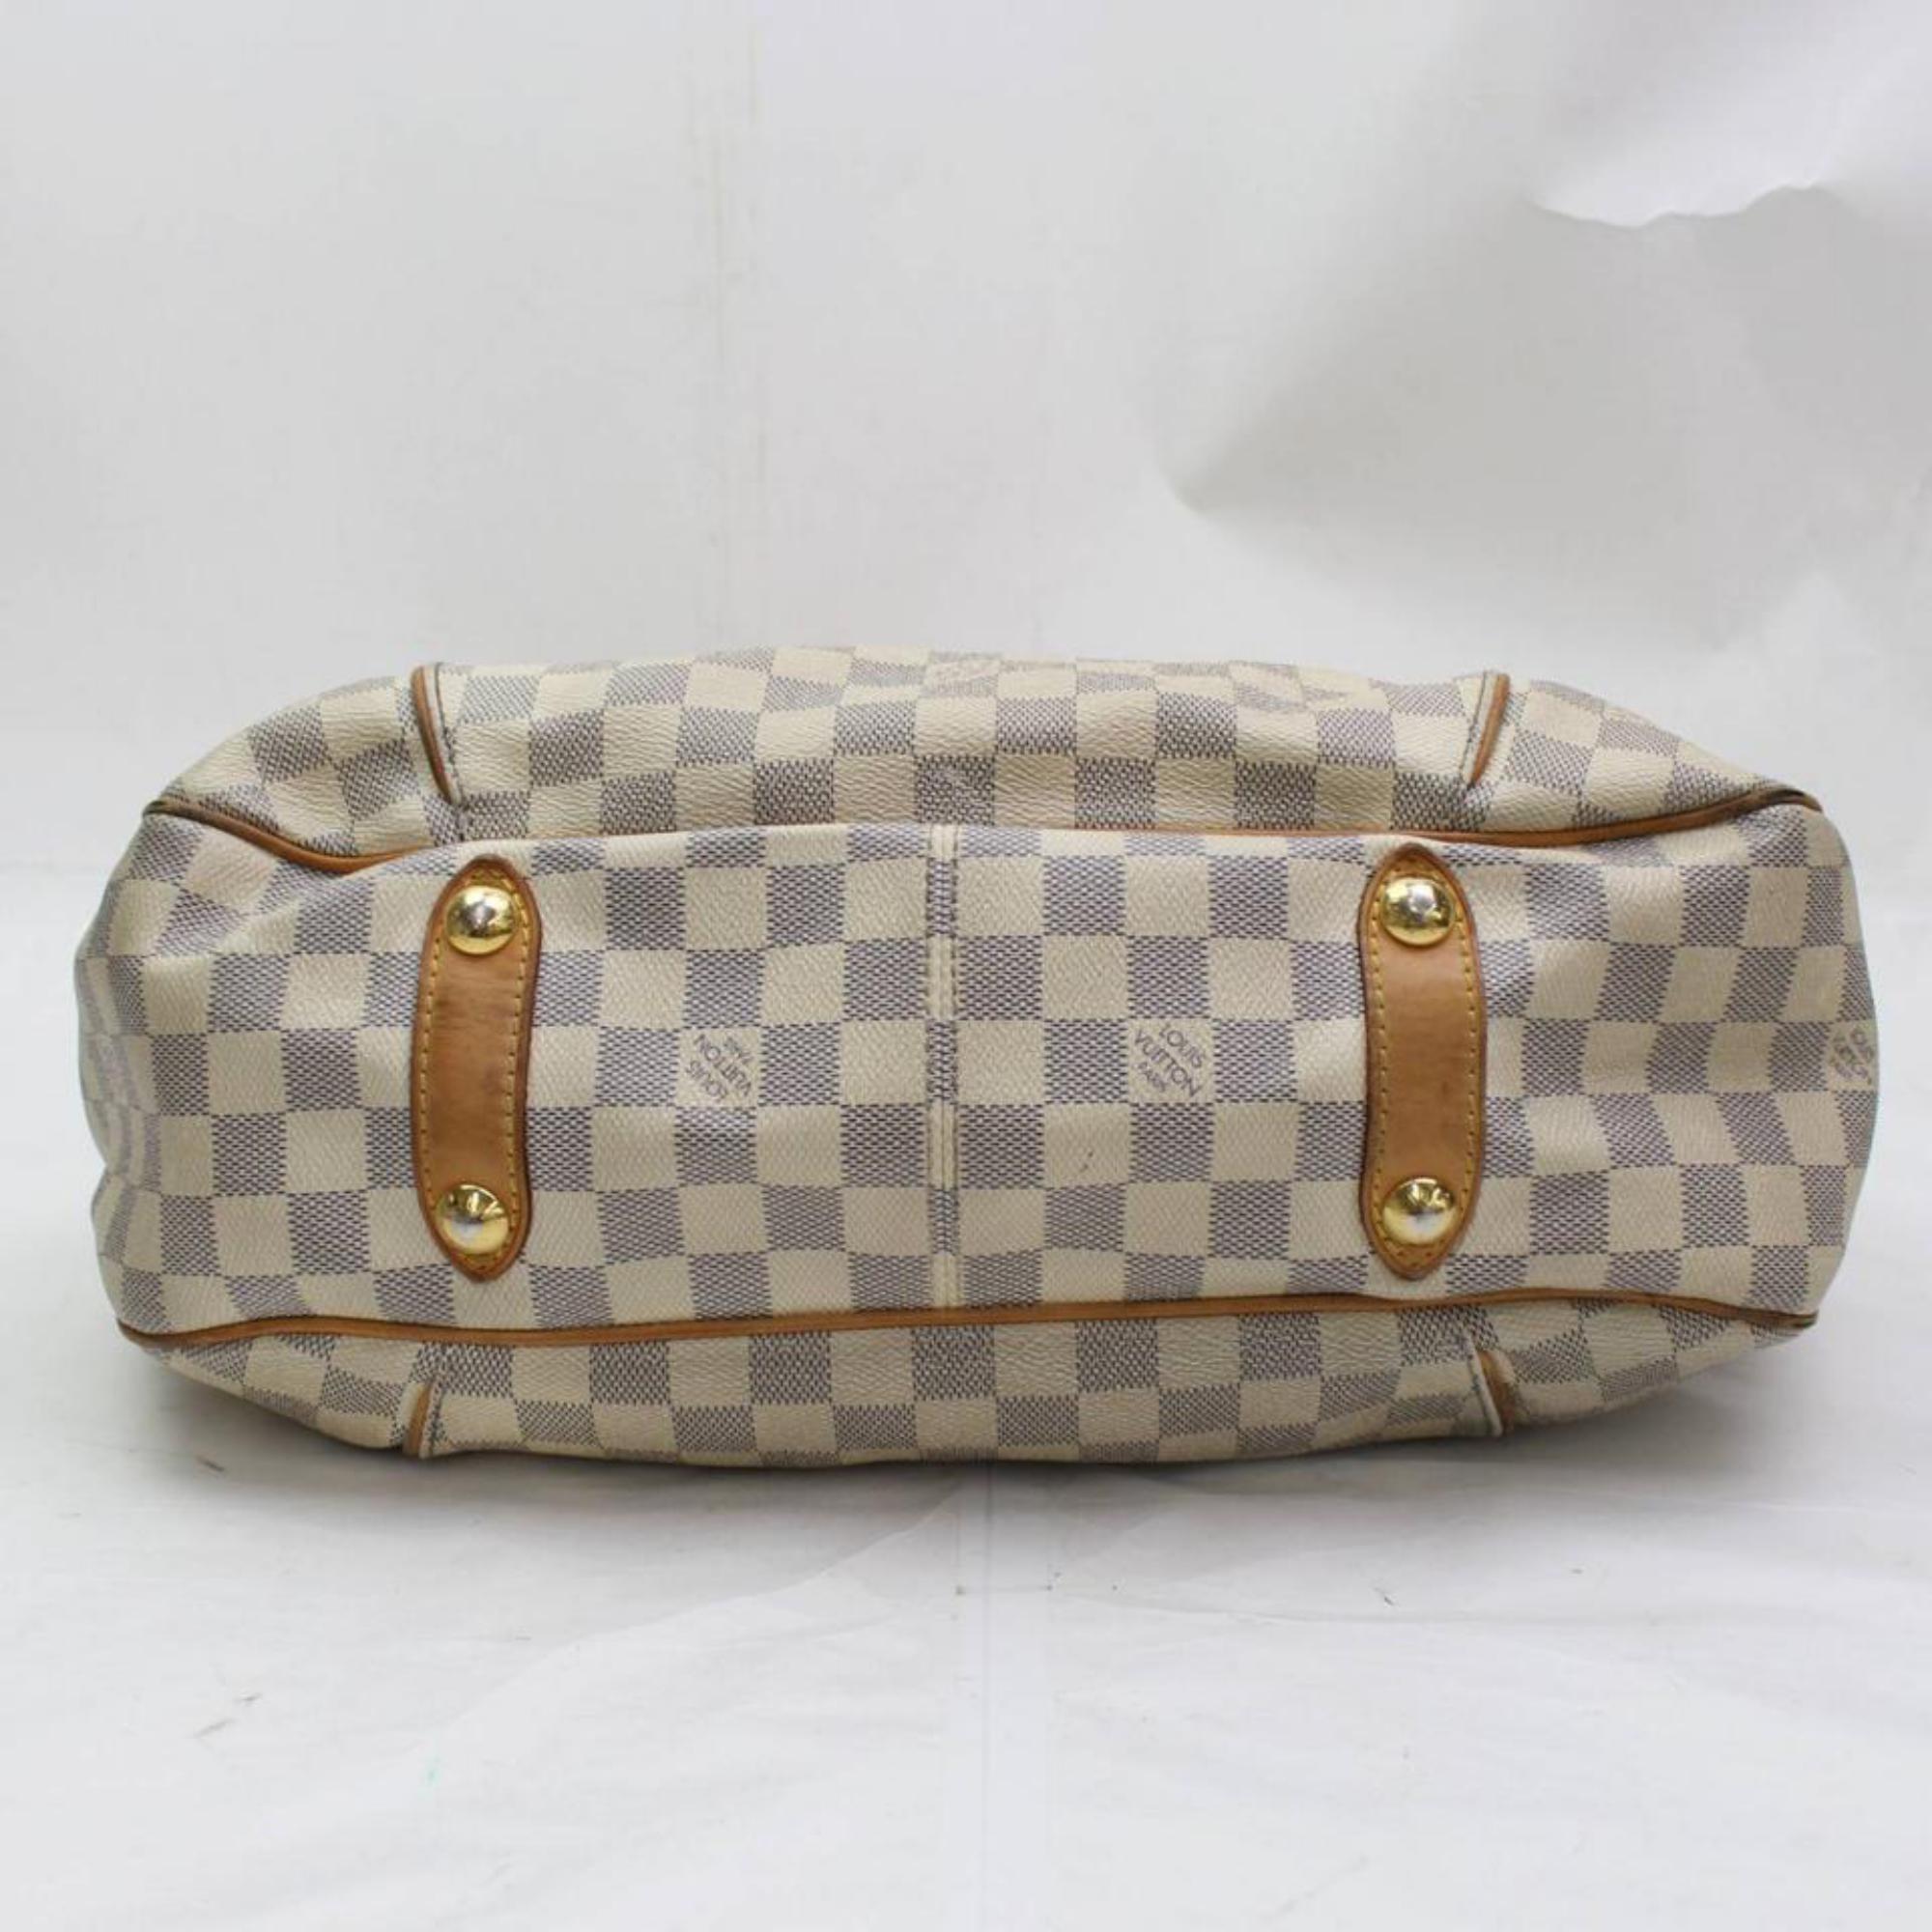 Louis Vuitton Galliera Damier Azur Pm Hobo 867767 White  Shoulder Bag For Sale 4